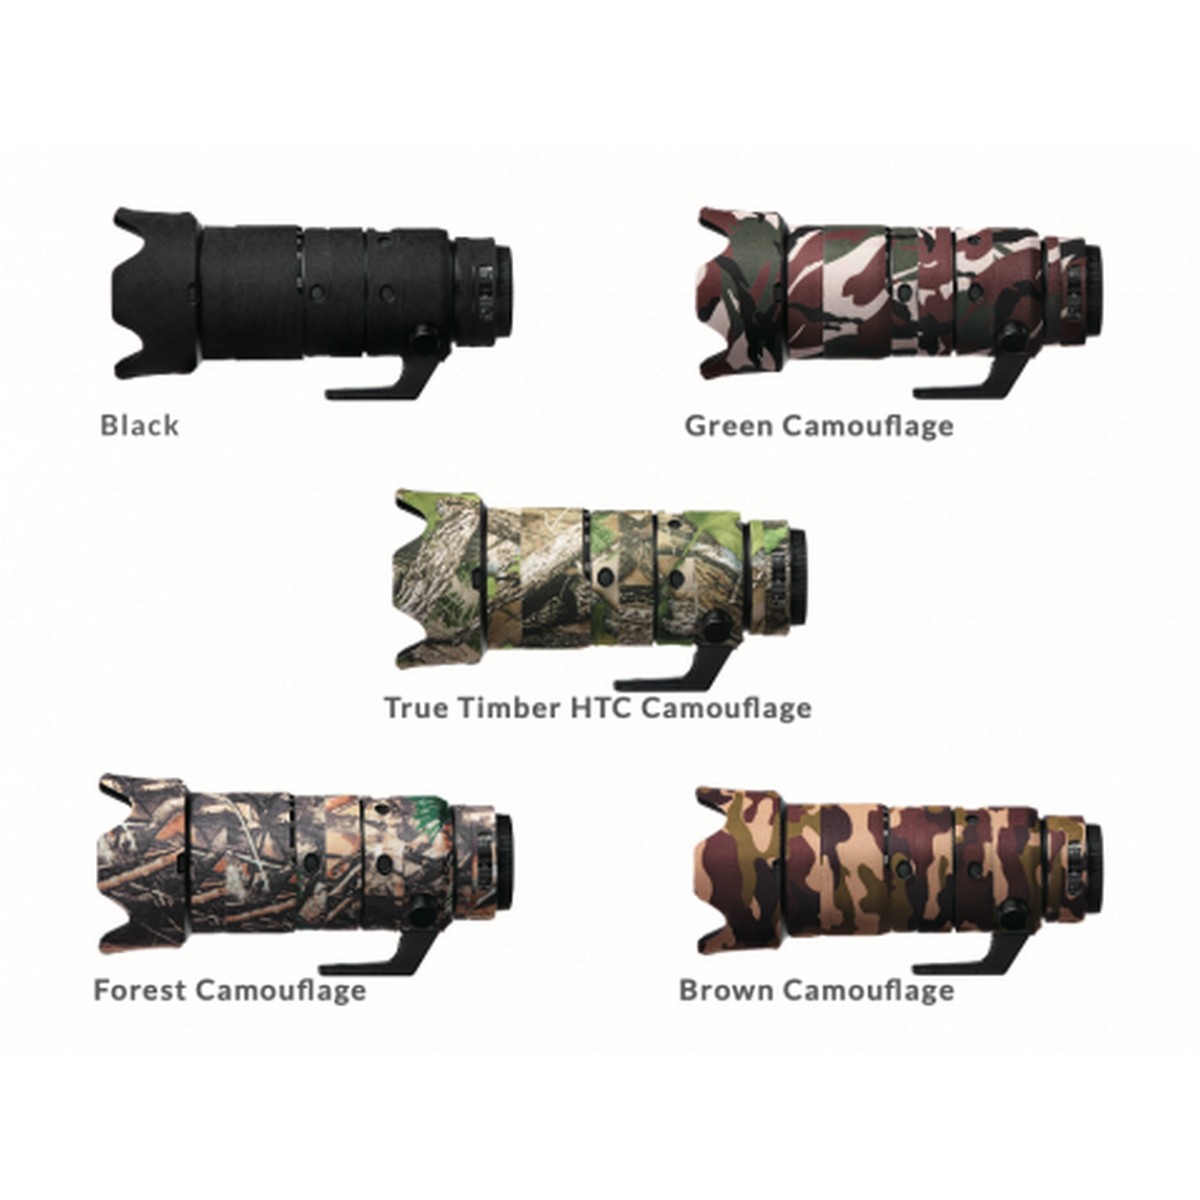 Easycover Lens Oak Objektivschutz für Sigma 150-600 mm 1:5-6,3 DG OS HSM Contemporary Wald Camouflage